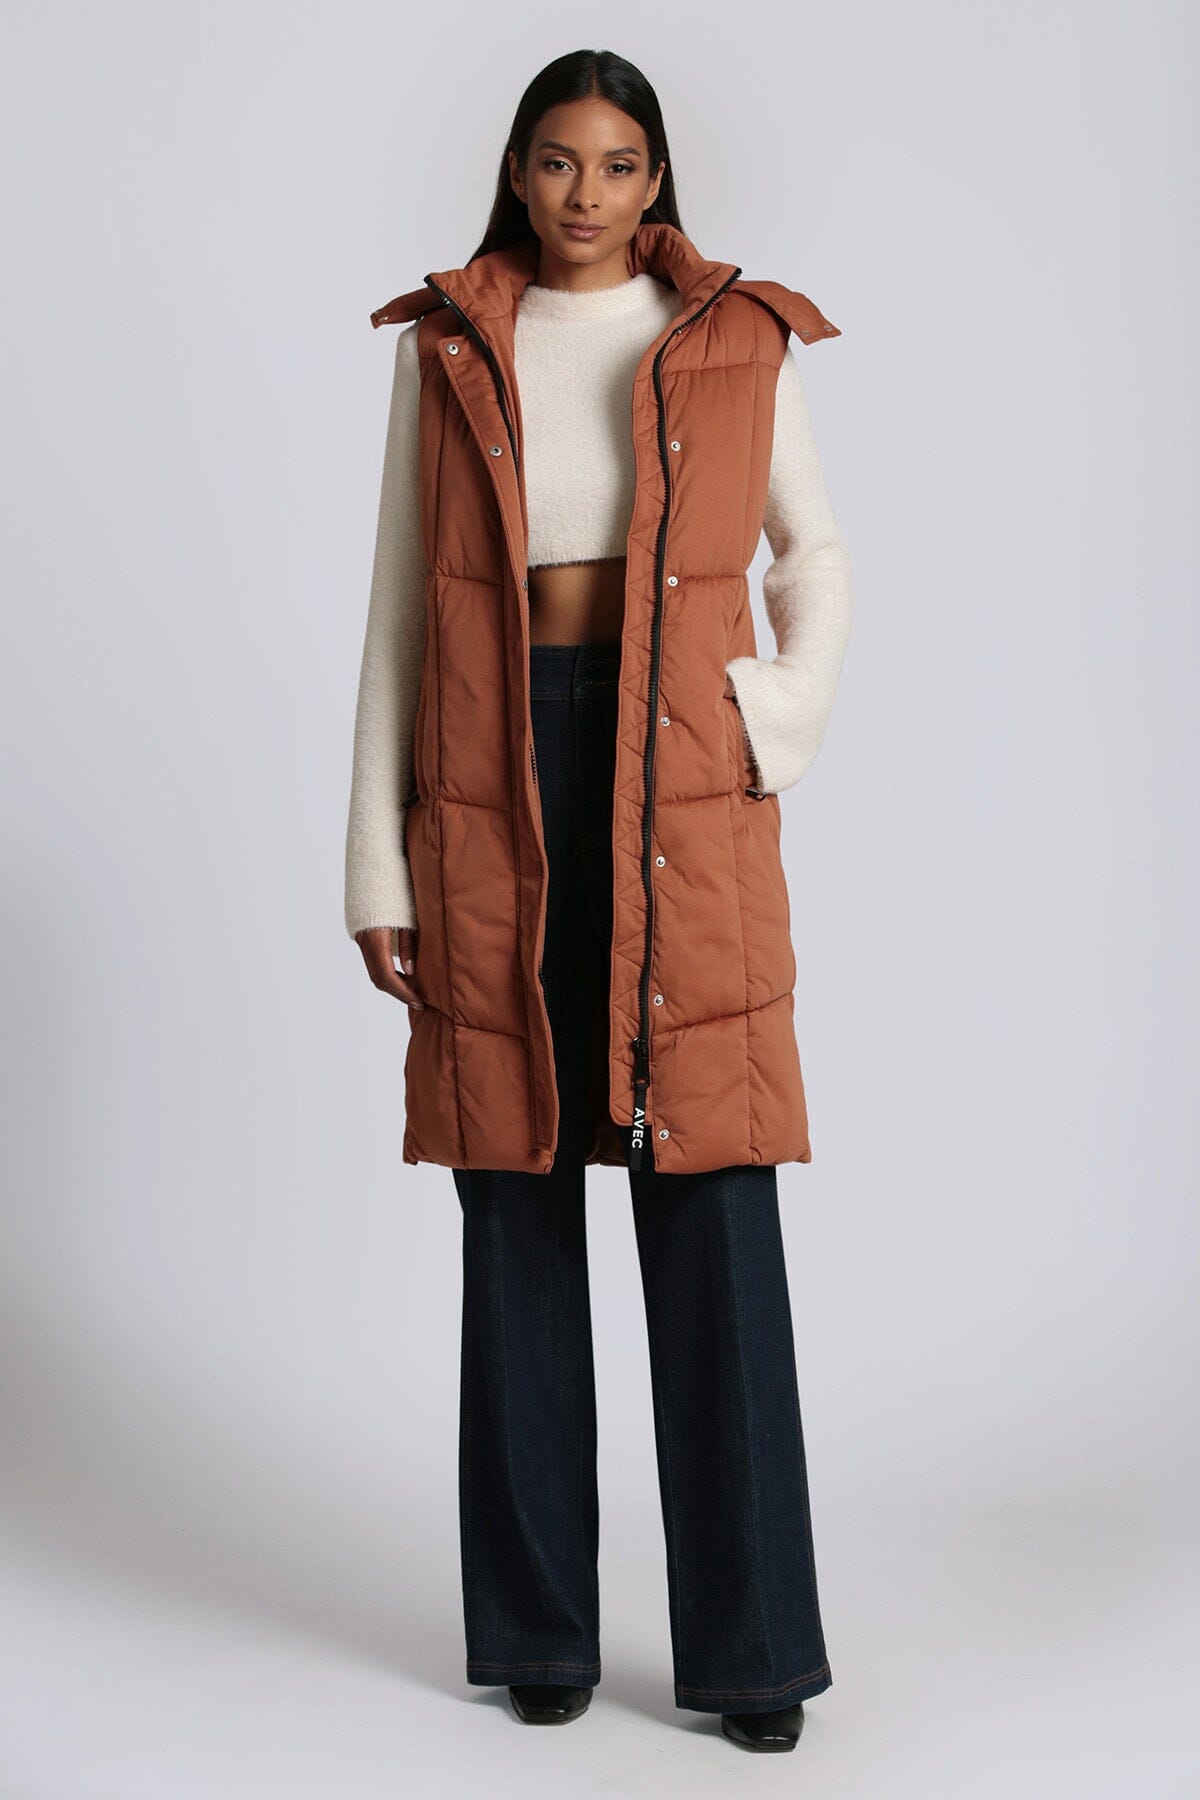 thermal puff hooded longline puffer vest cedar brown - women's designer fashion figure flattering outerwear